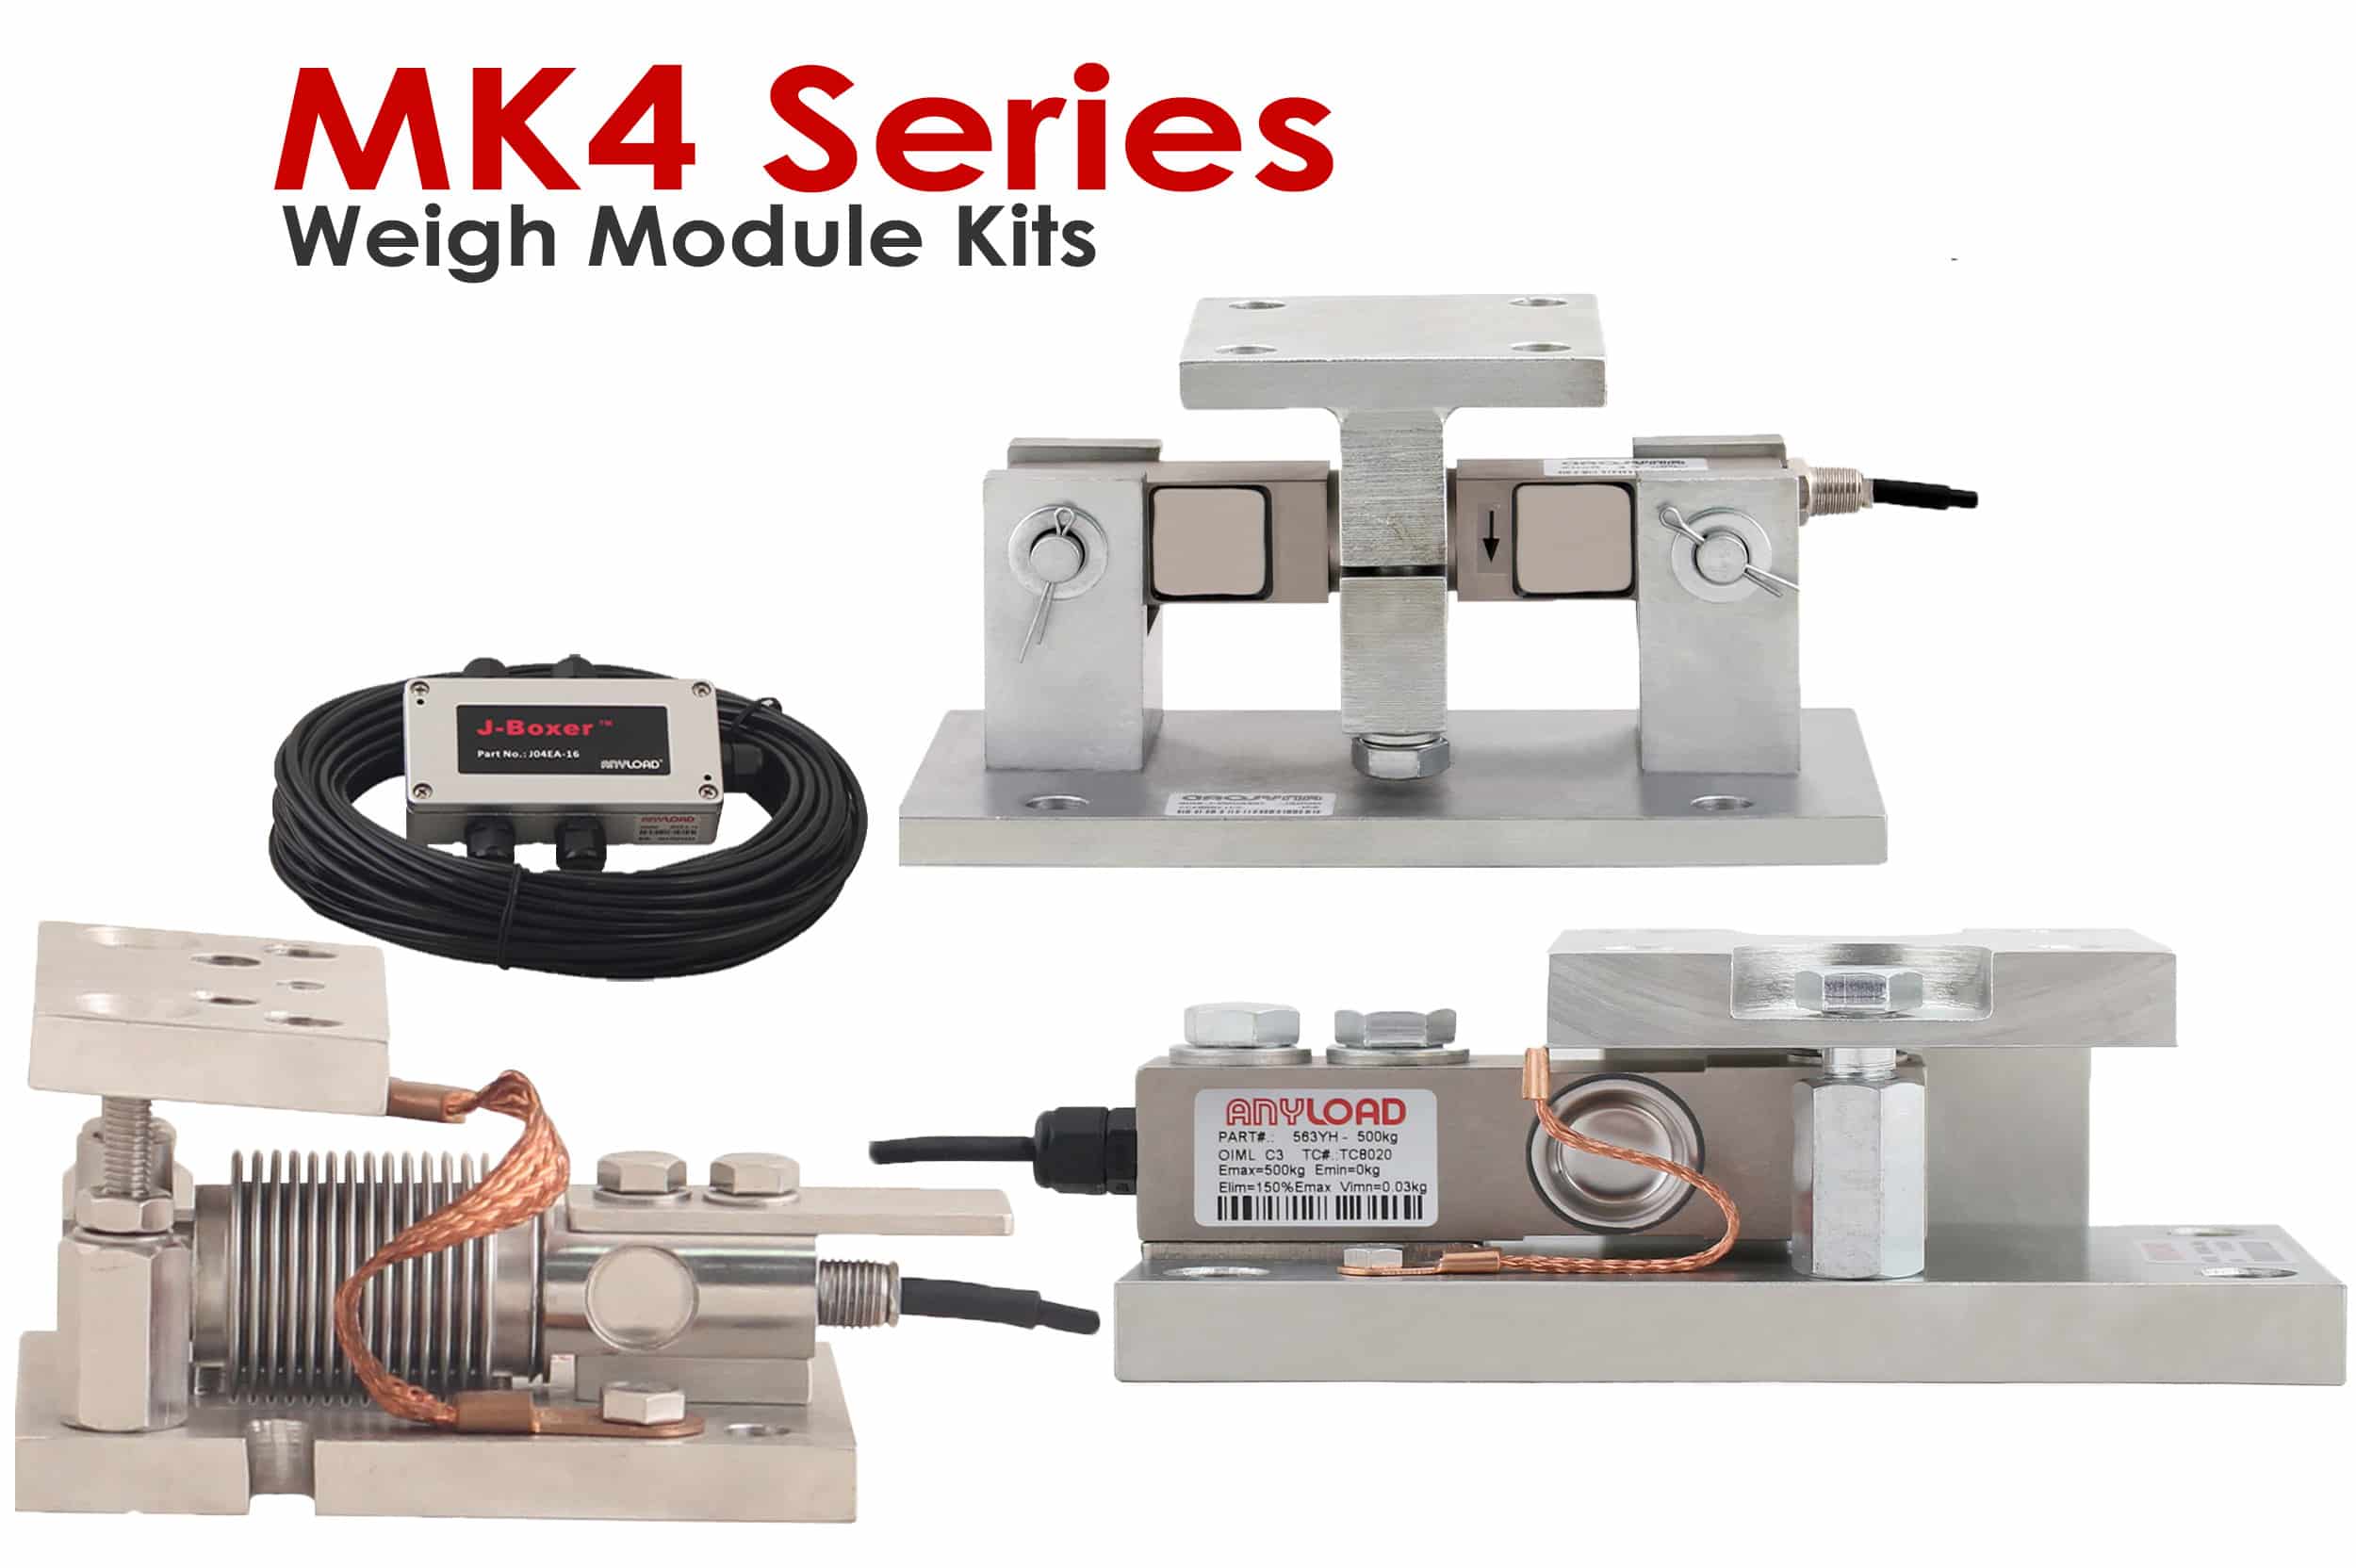 Introducing MK4 Series Weigh Module Kits